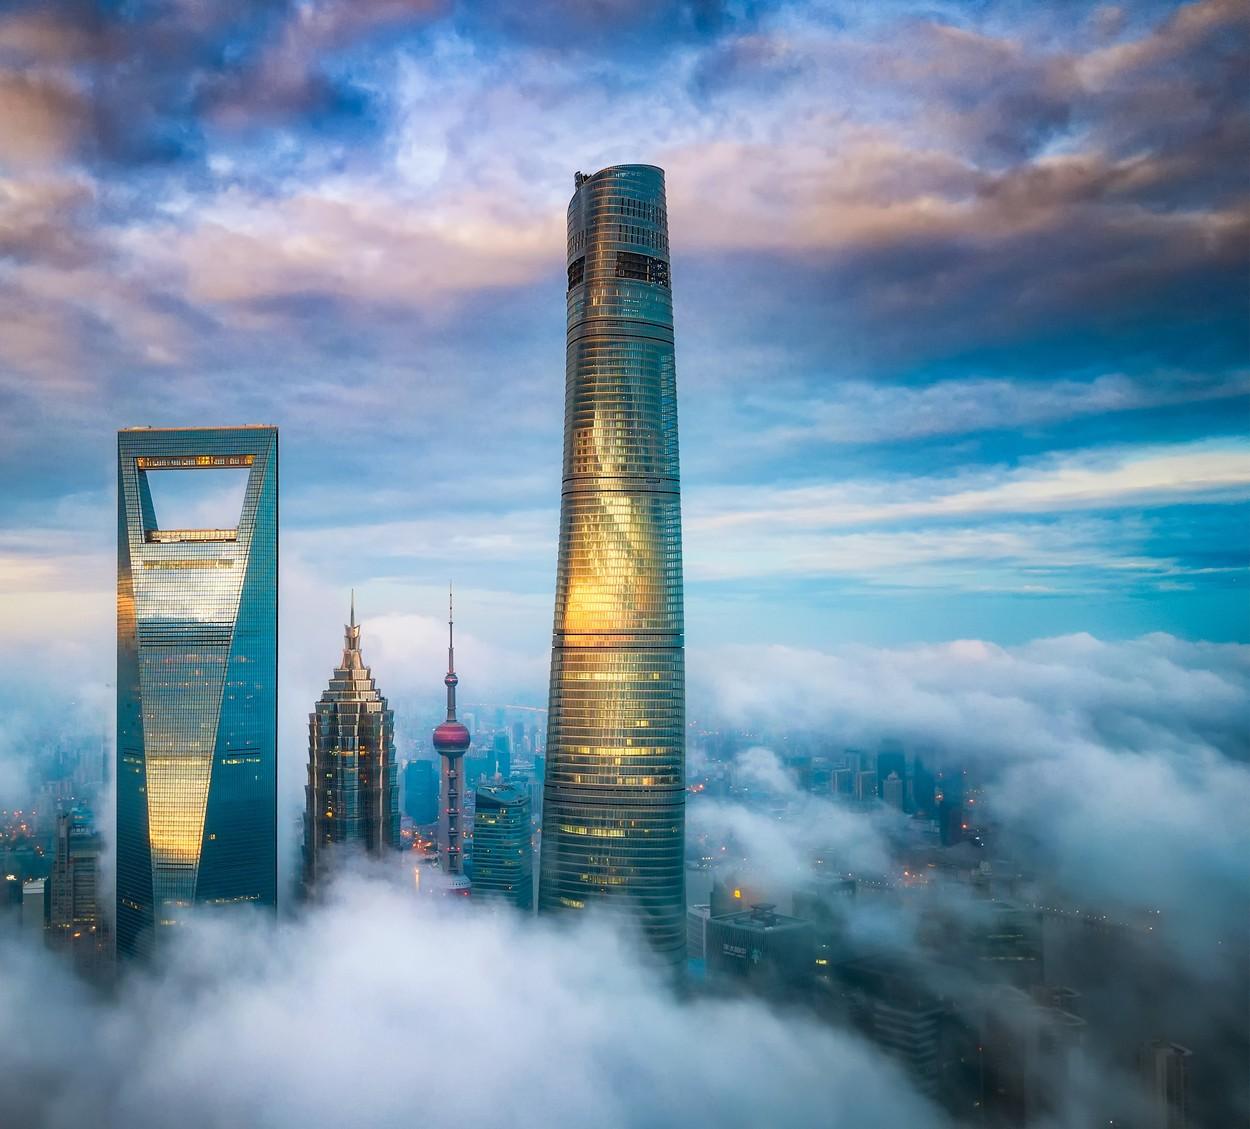 Turnul Shanghai are 632 metri înălţime